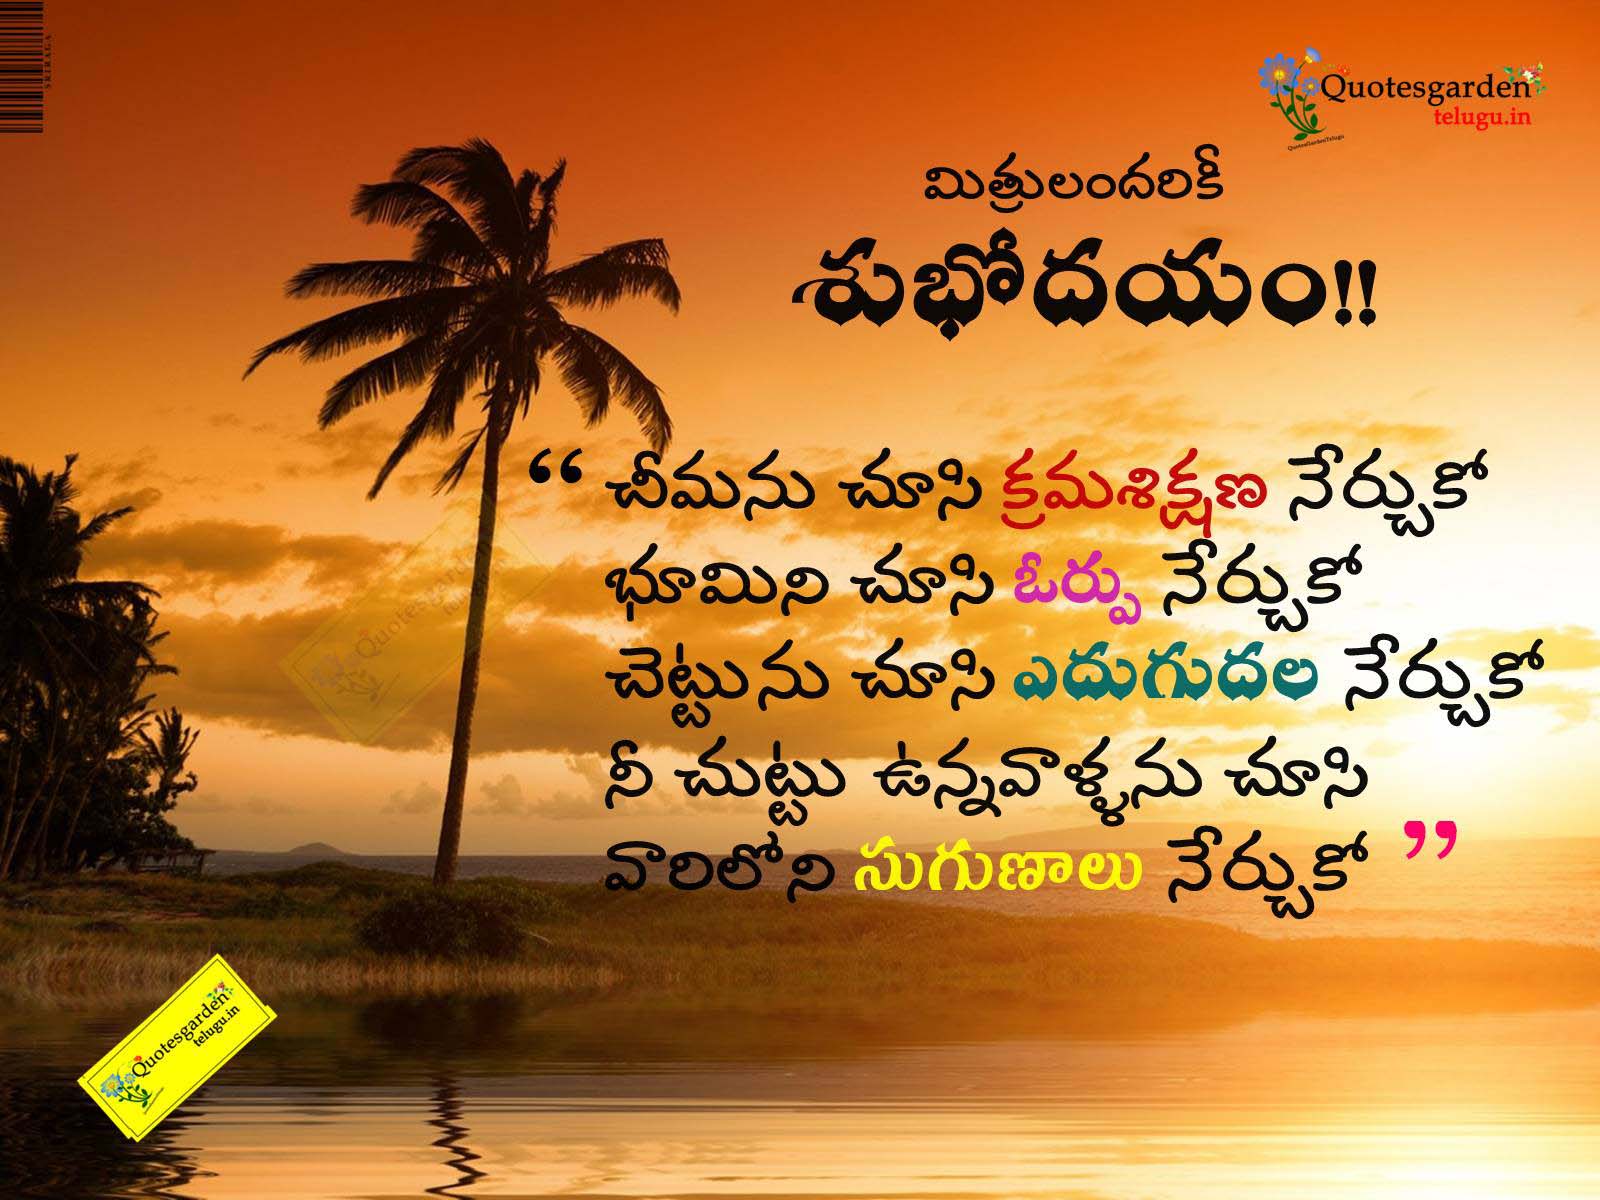 Telugu Life Skills Telugu Quotes